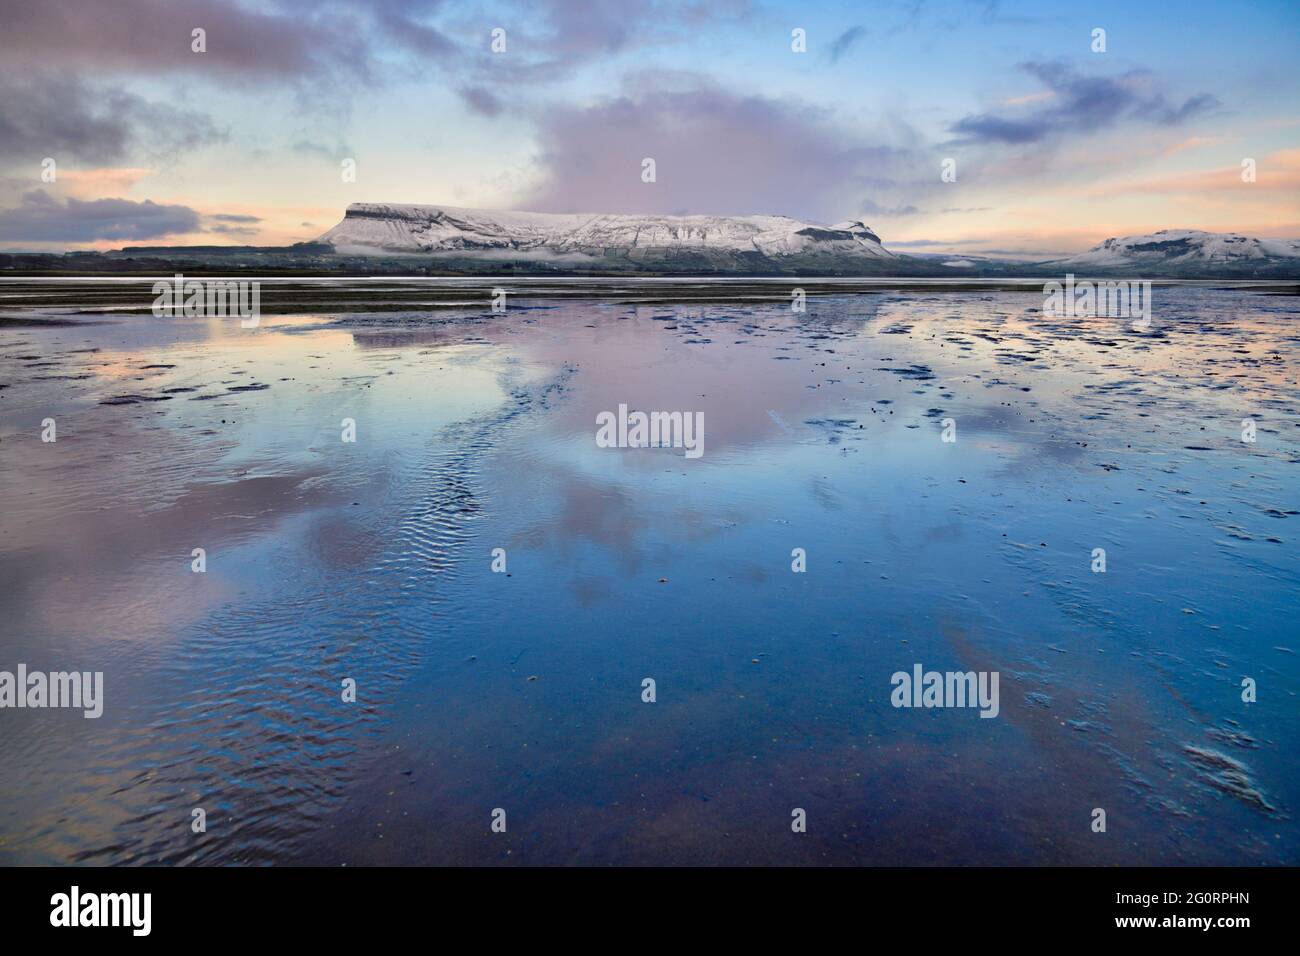 Irland, County Sligo, Ben Bulben Berg mit Rosses Point 3. Strand im Vordergrund. Stockfoto